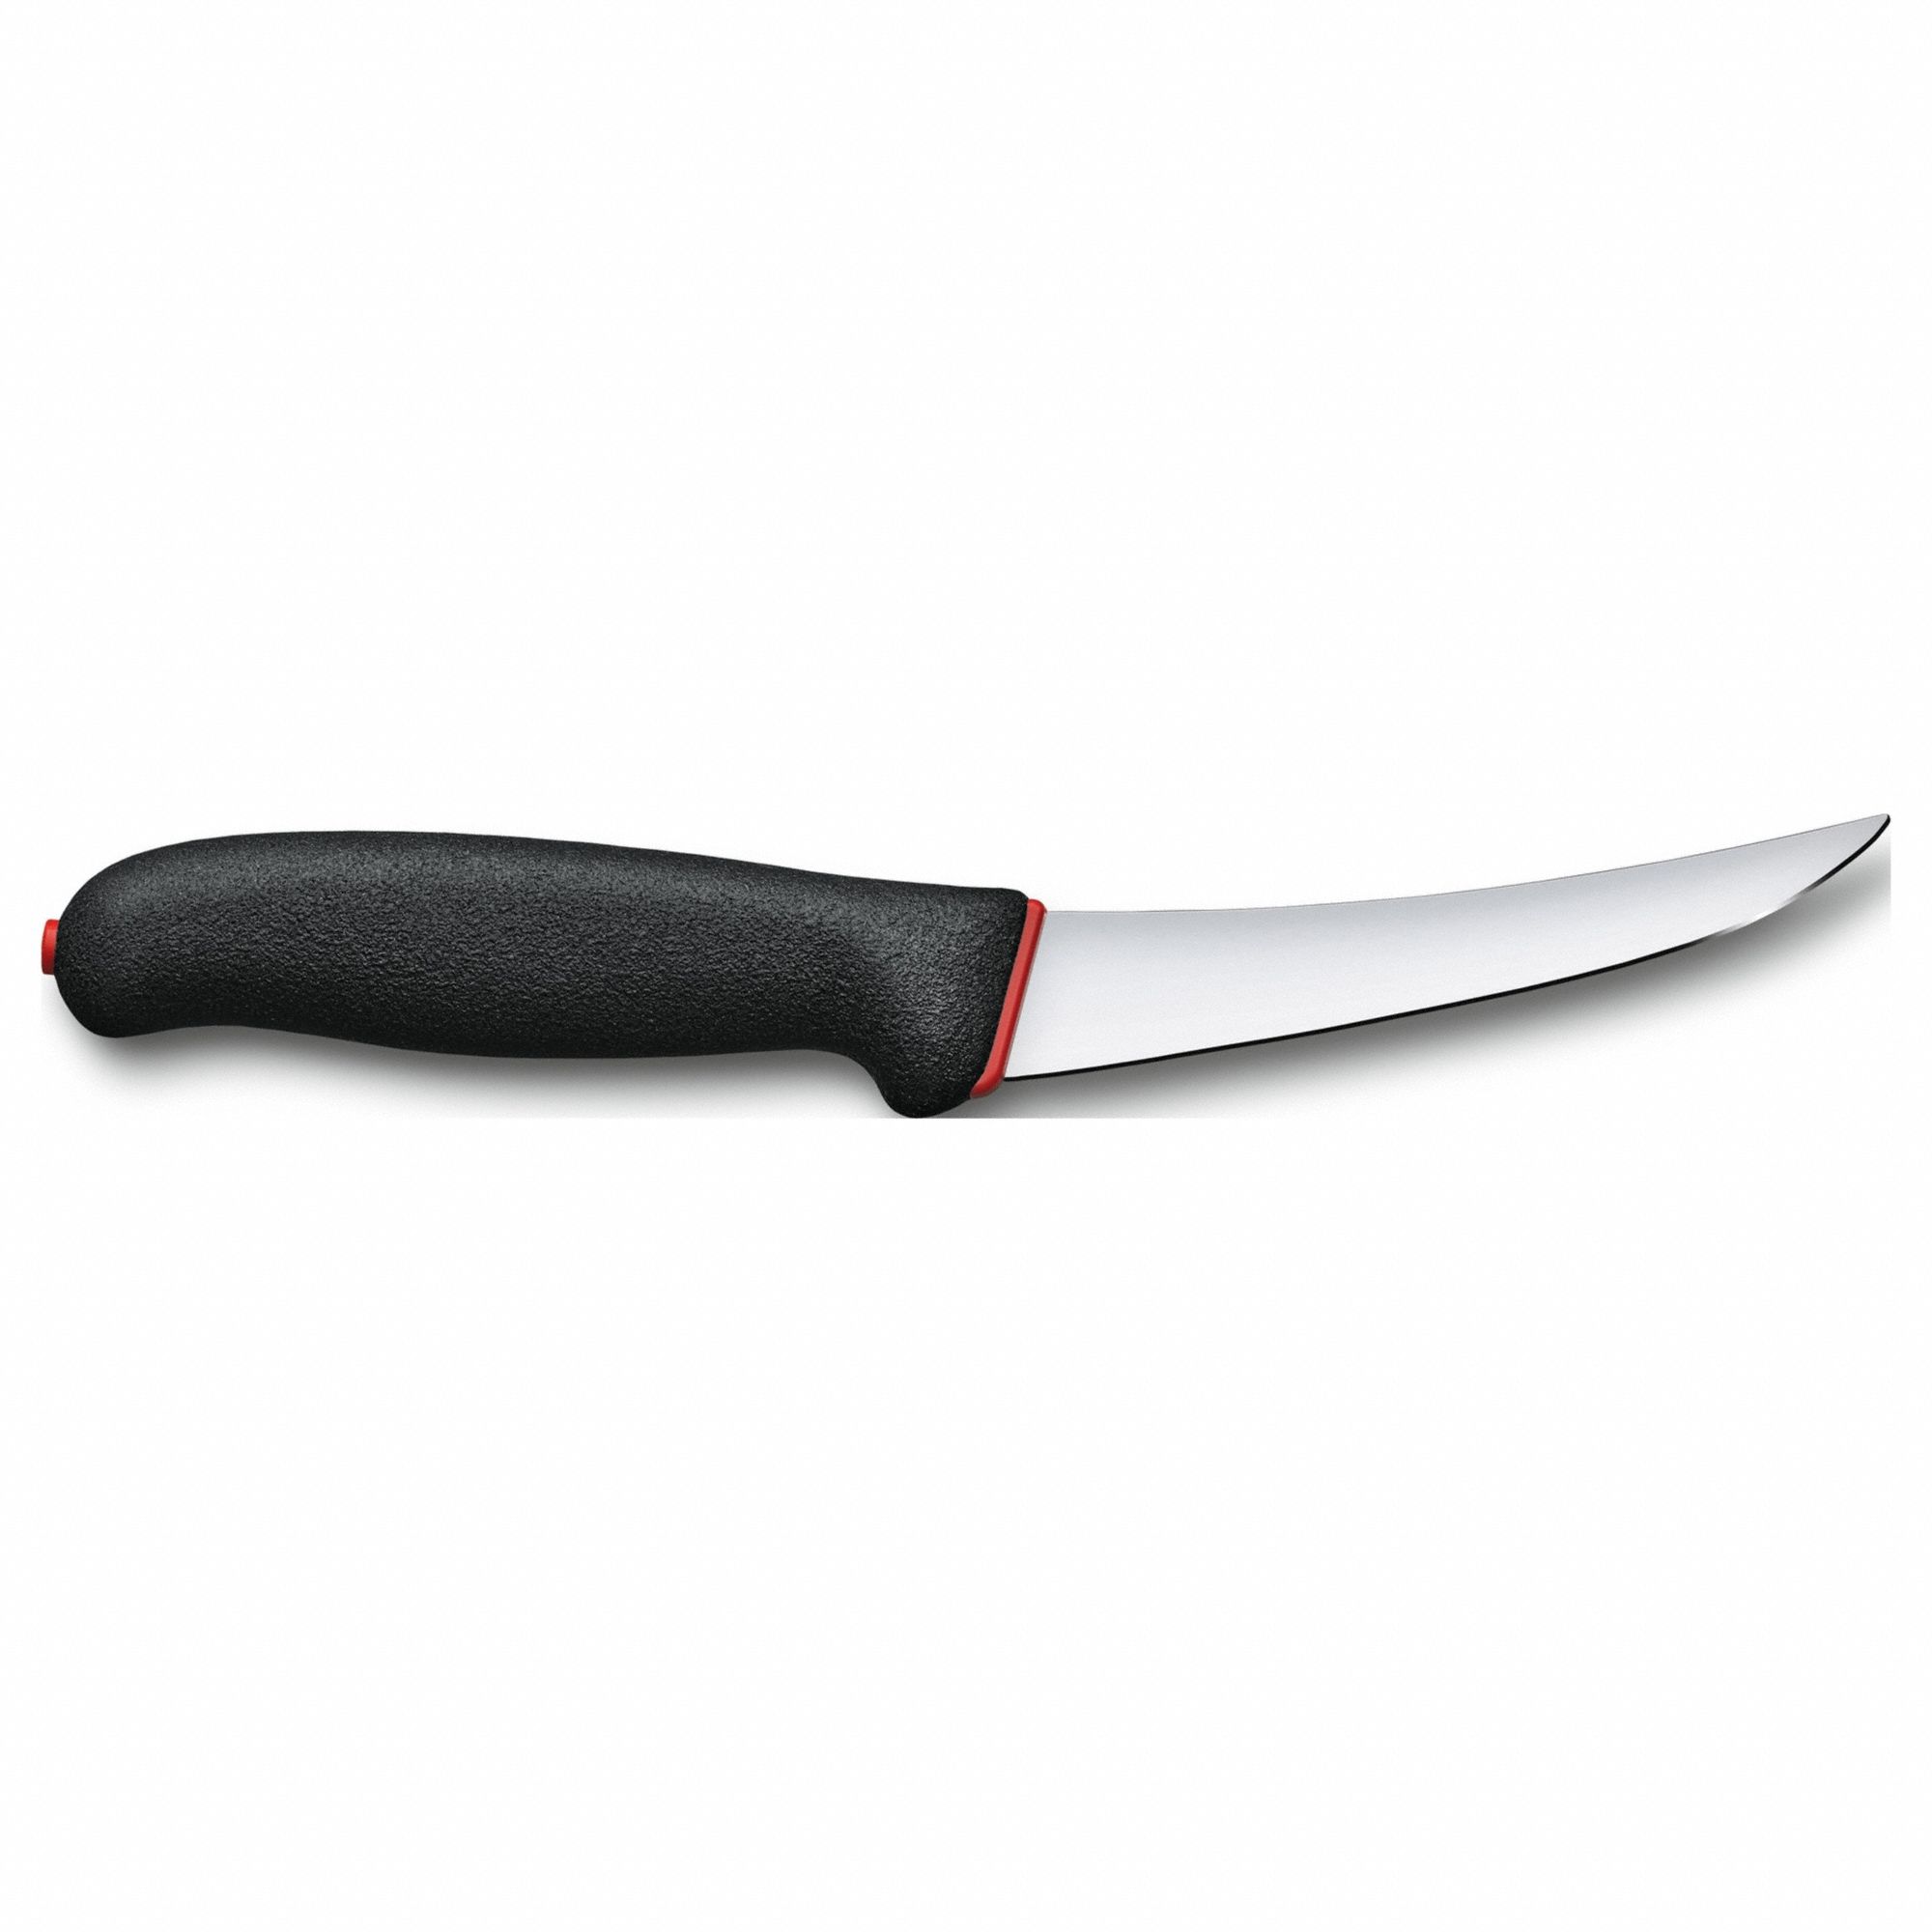 Boning Knife: 5 in Lg, Curved/Flex Blade, High Carbon Stainless Steel, Black